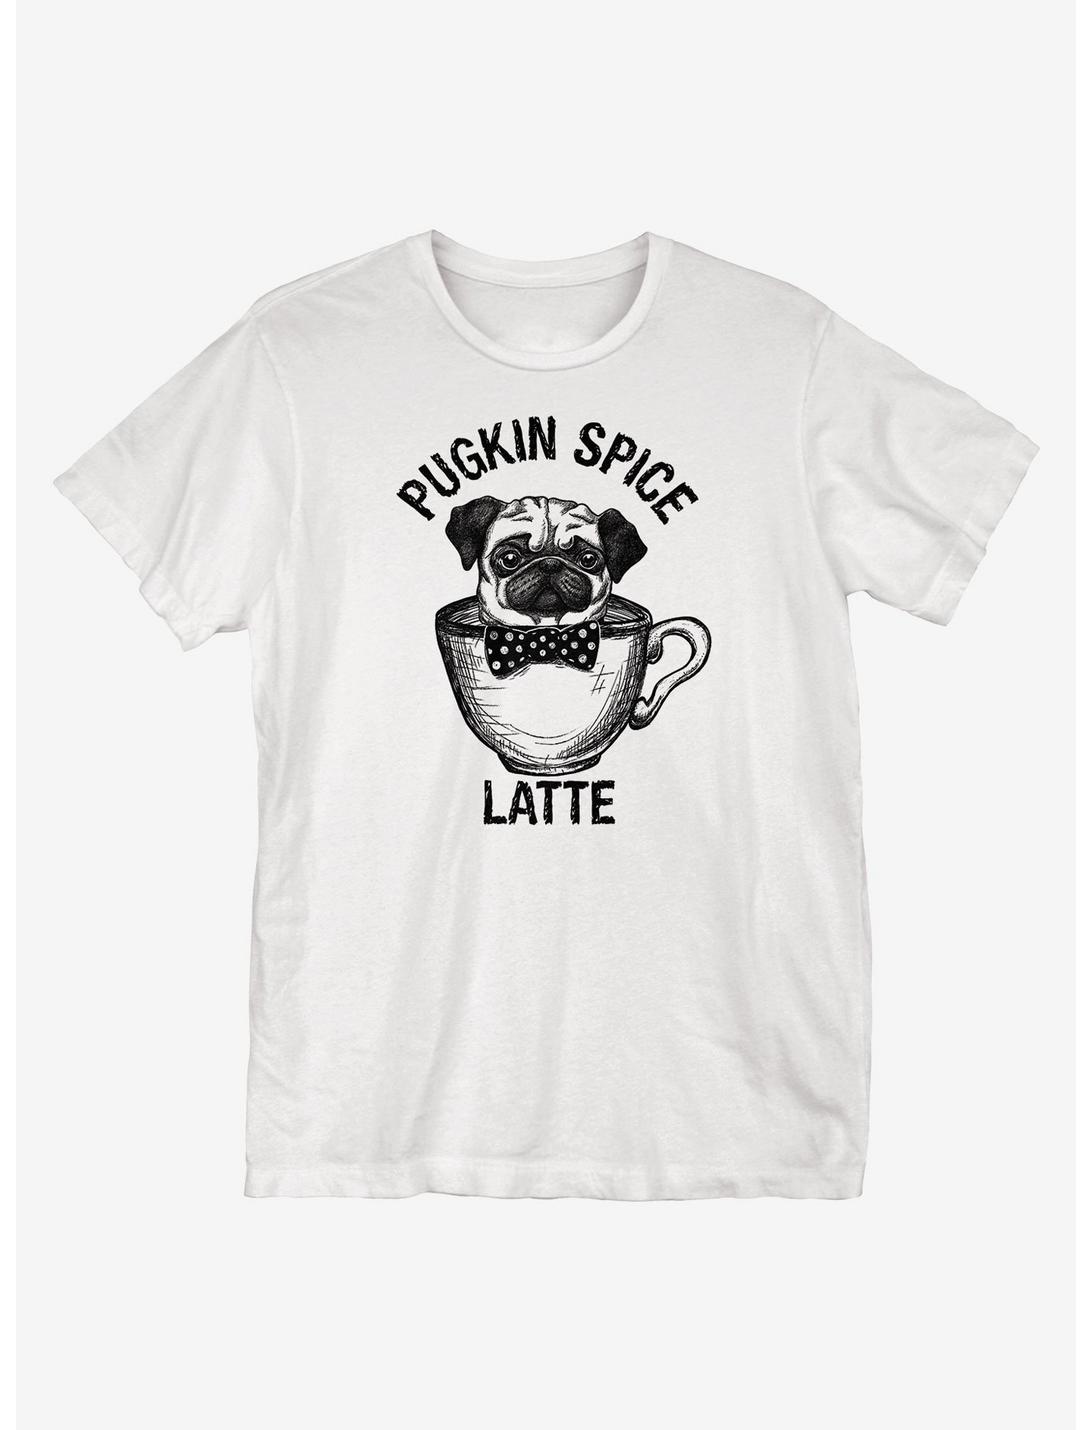 Pugkin Spice T-Shirt, WHITE, hi-res